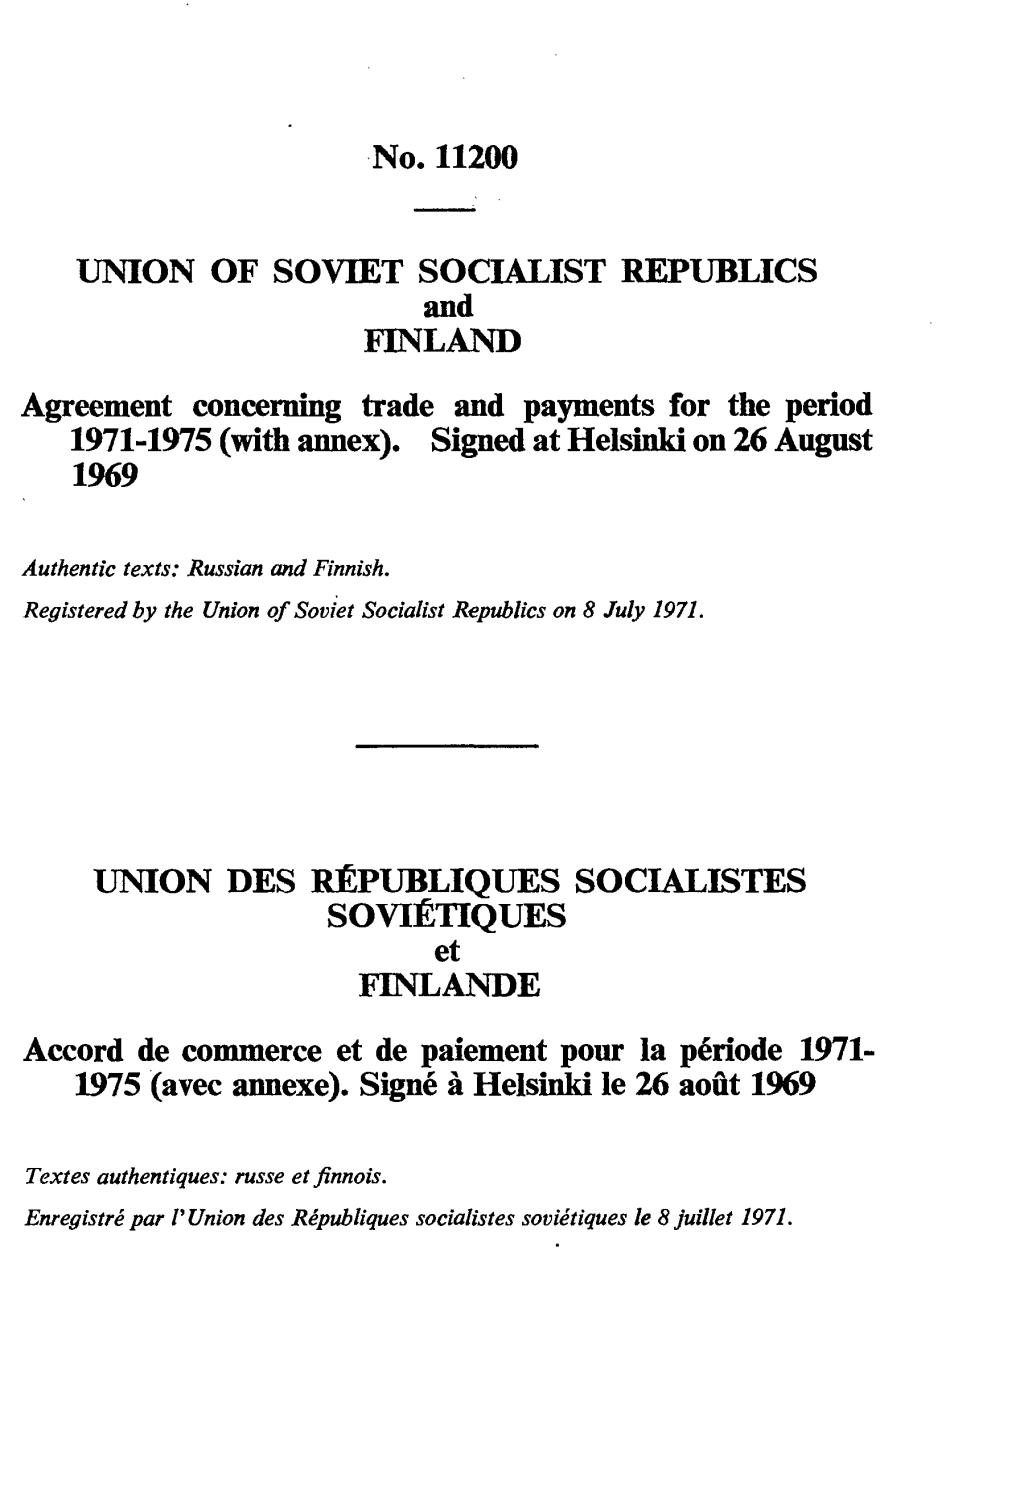 No. 11200 UNION of SOVIET SOCIALIST REPUBLICS And